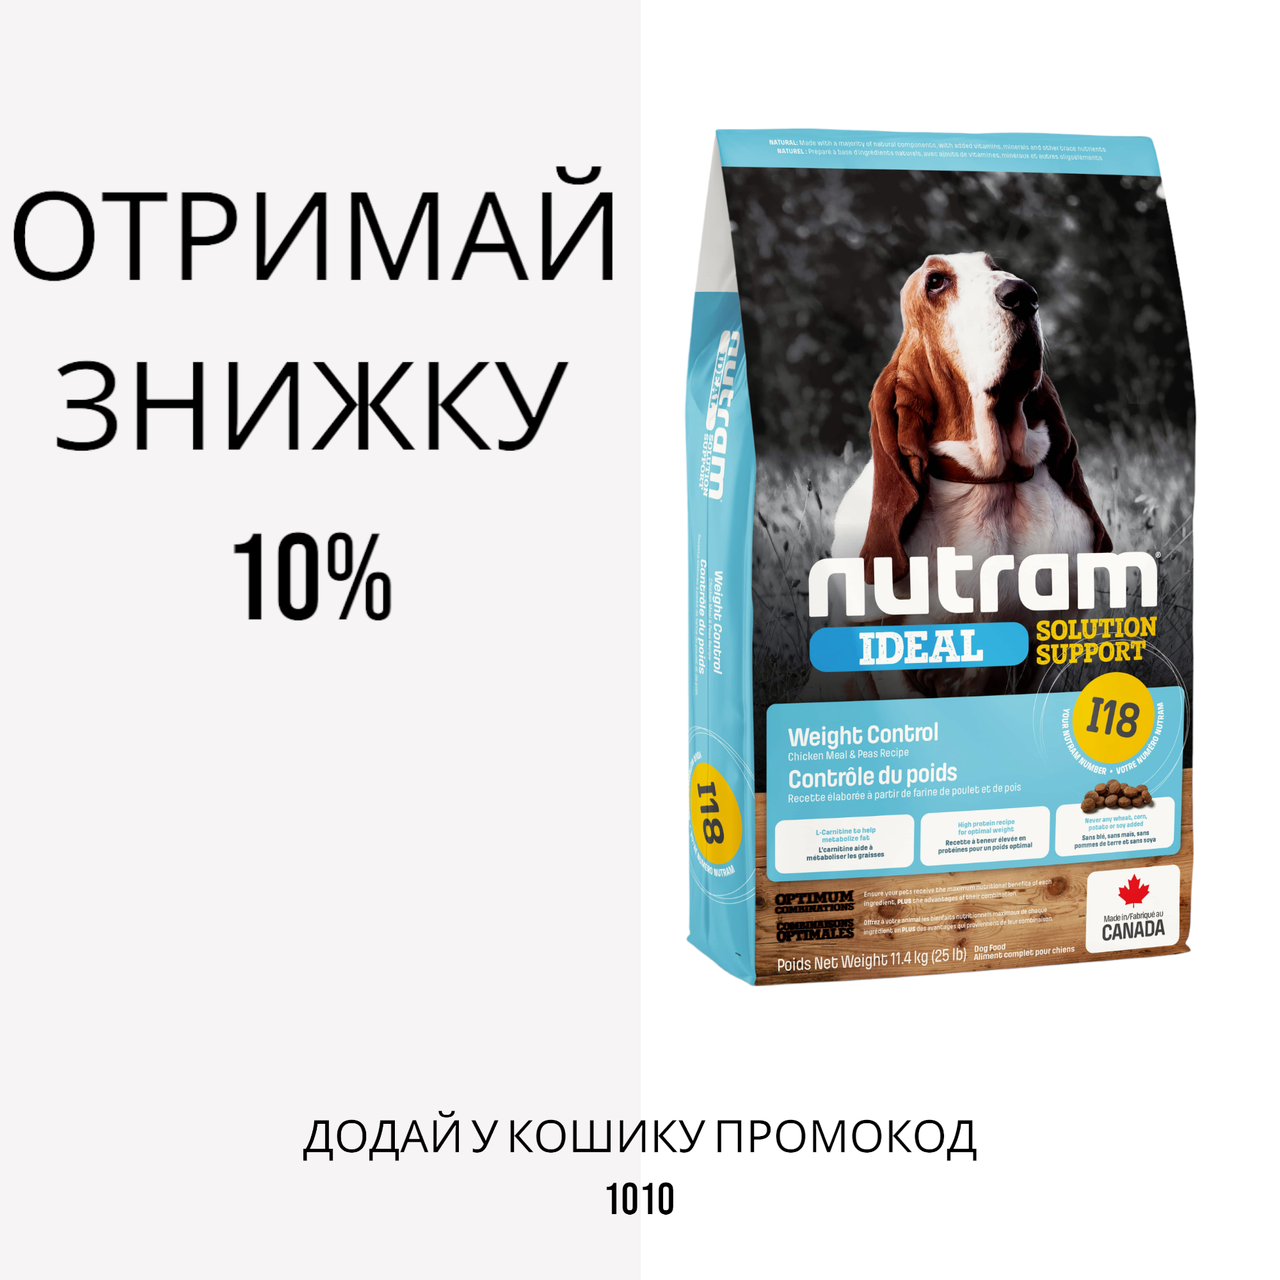 Nutram (Нутрам) I18 Ideal Solution Support Weight Control Dog Food сухий корм для контролю ваги, 11,4 кг